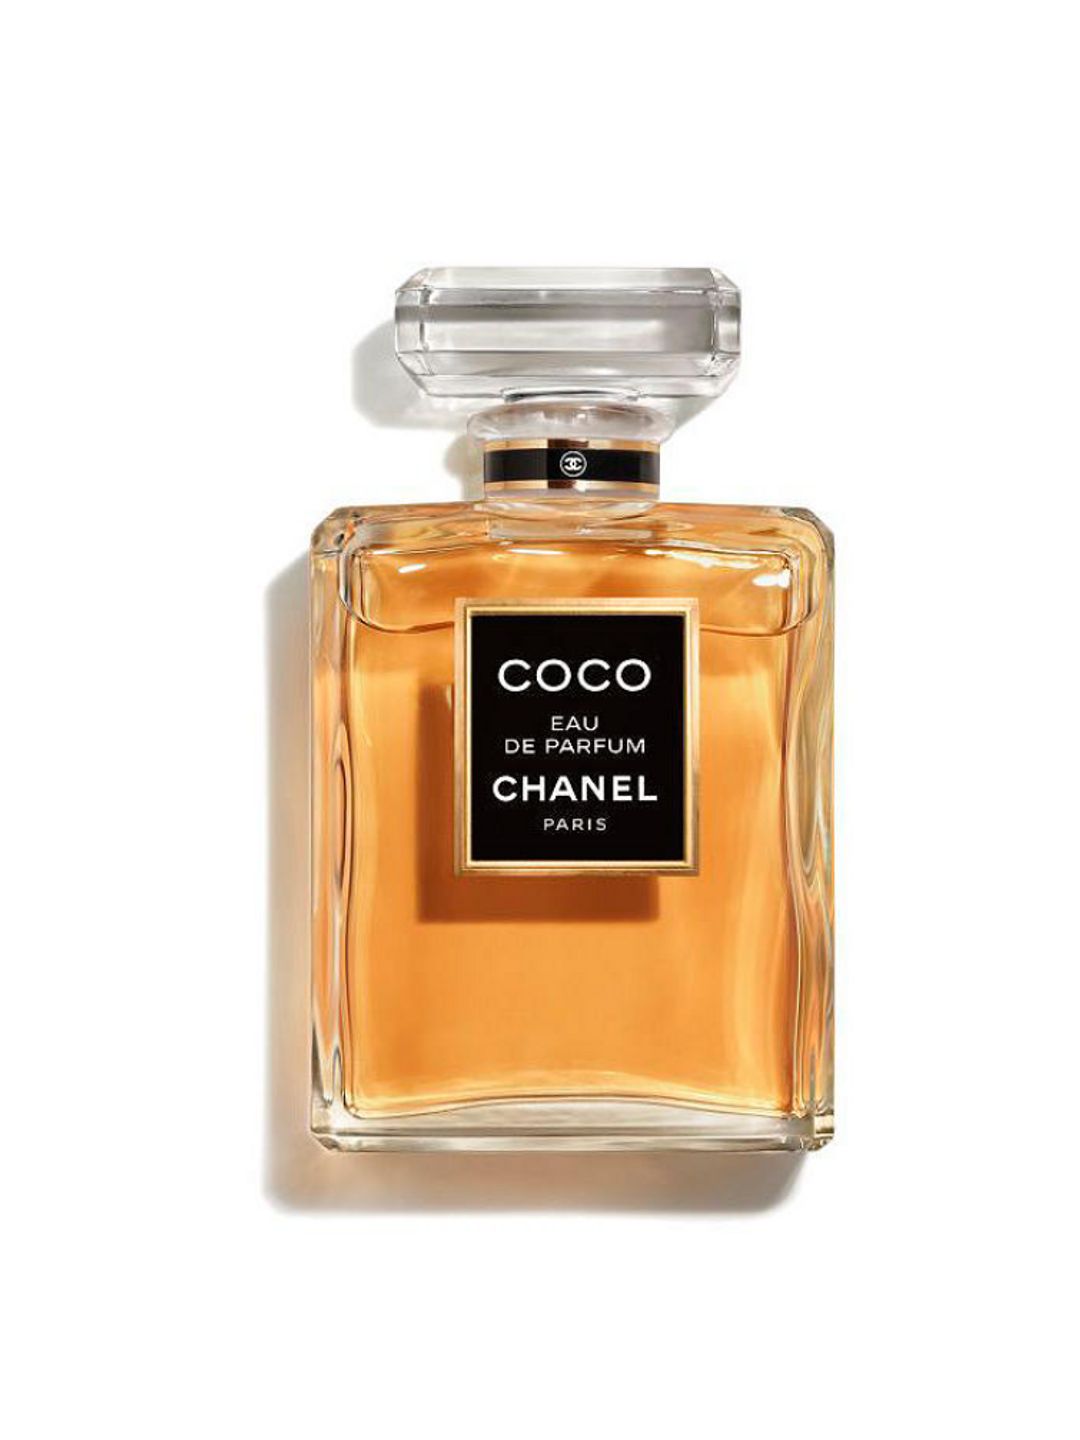 Coco Eau de Parfum 50ml - Chanel